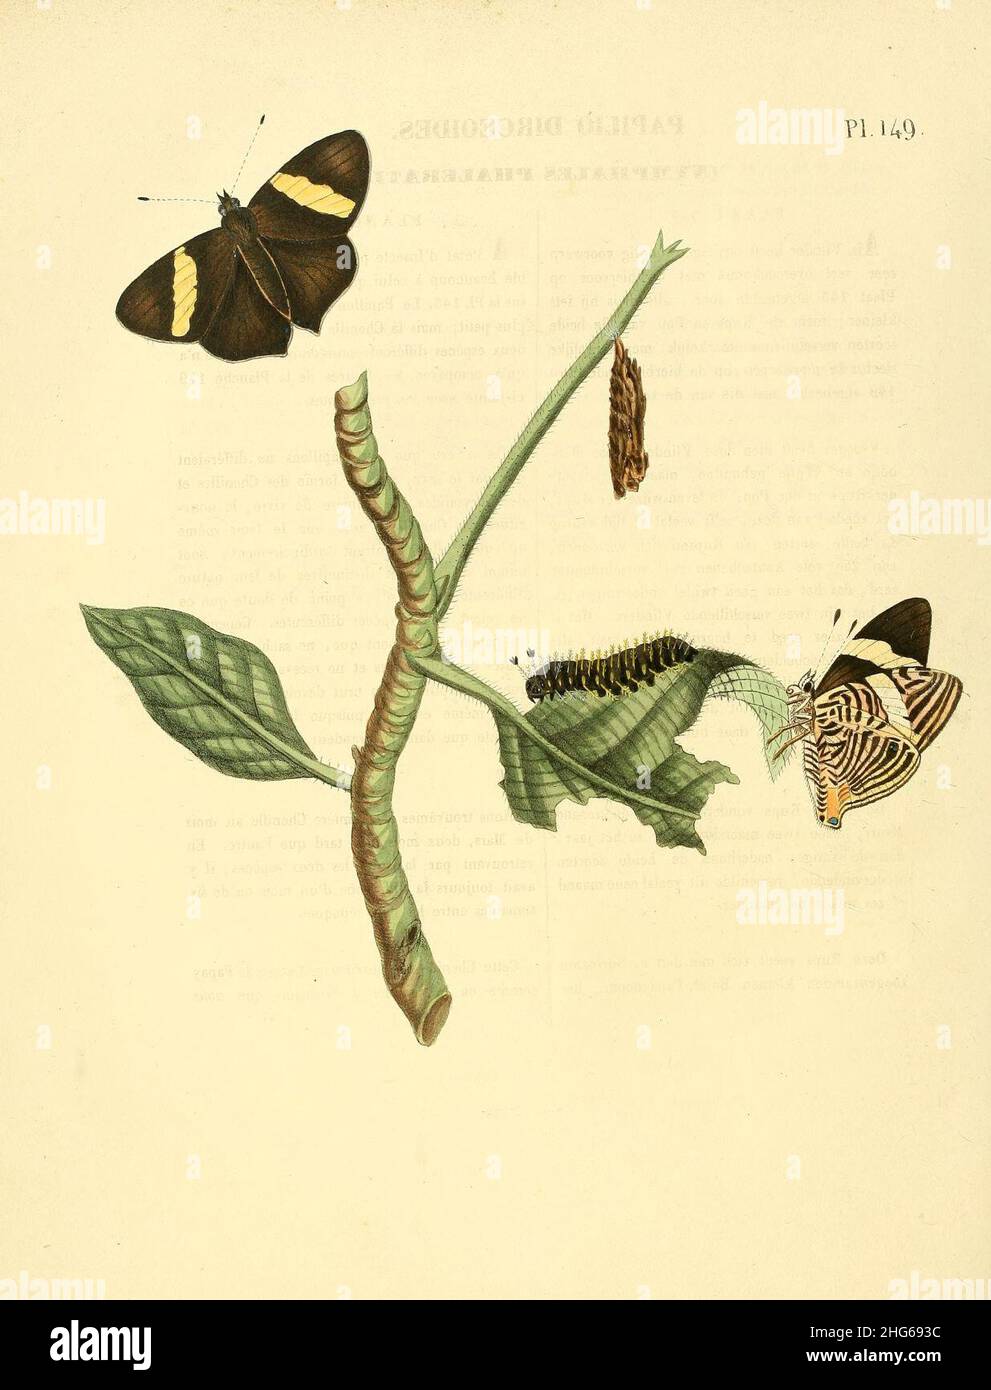 Sepp-Surinaamsche vlinders - pl 149 plate Colobura dirce. Stock Photo